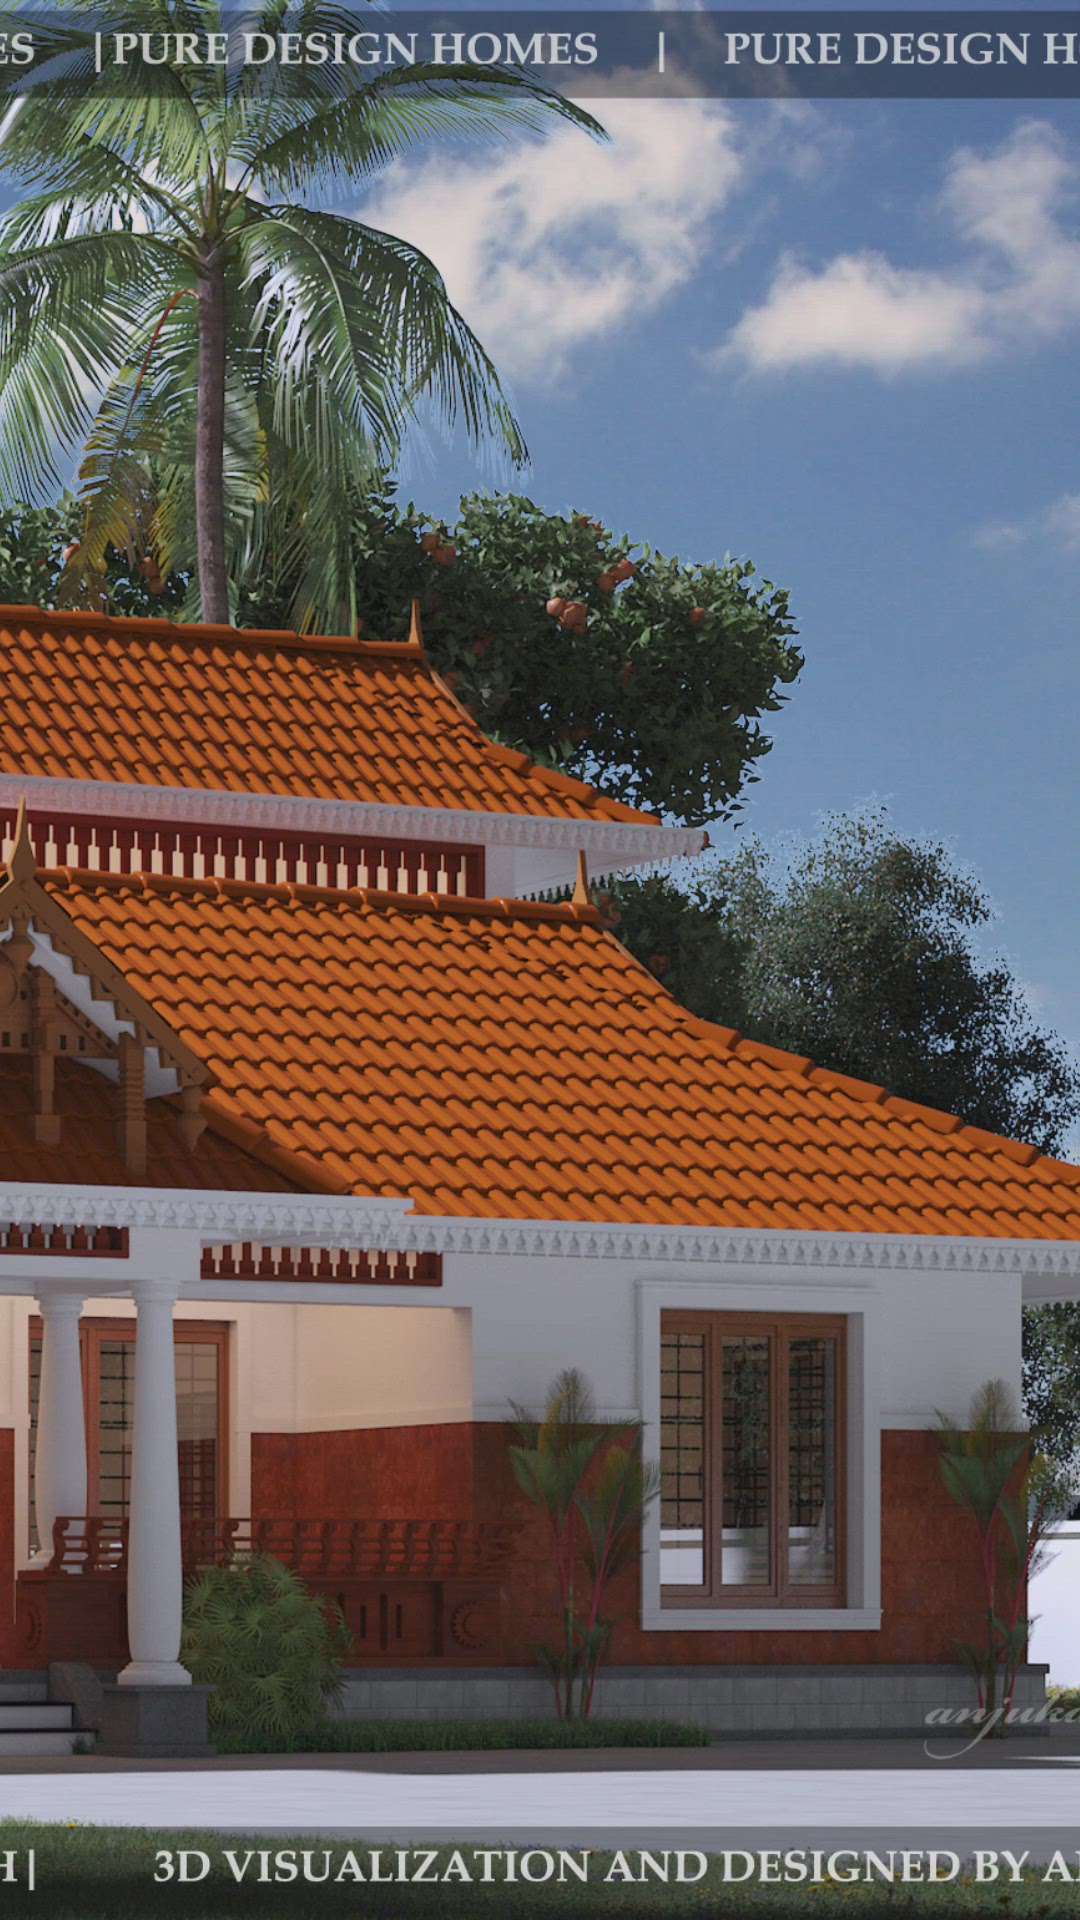 Kerala Traditional House Design /7 cent/1960sqft/3bhk/traditional style house
#TraditionalHouse #keralatraditionalhomes #3BHK